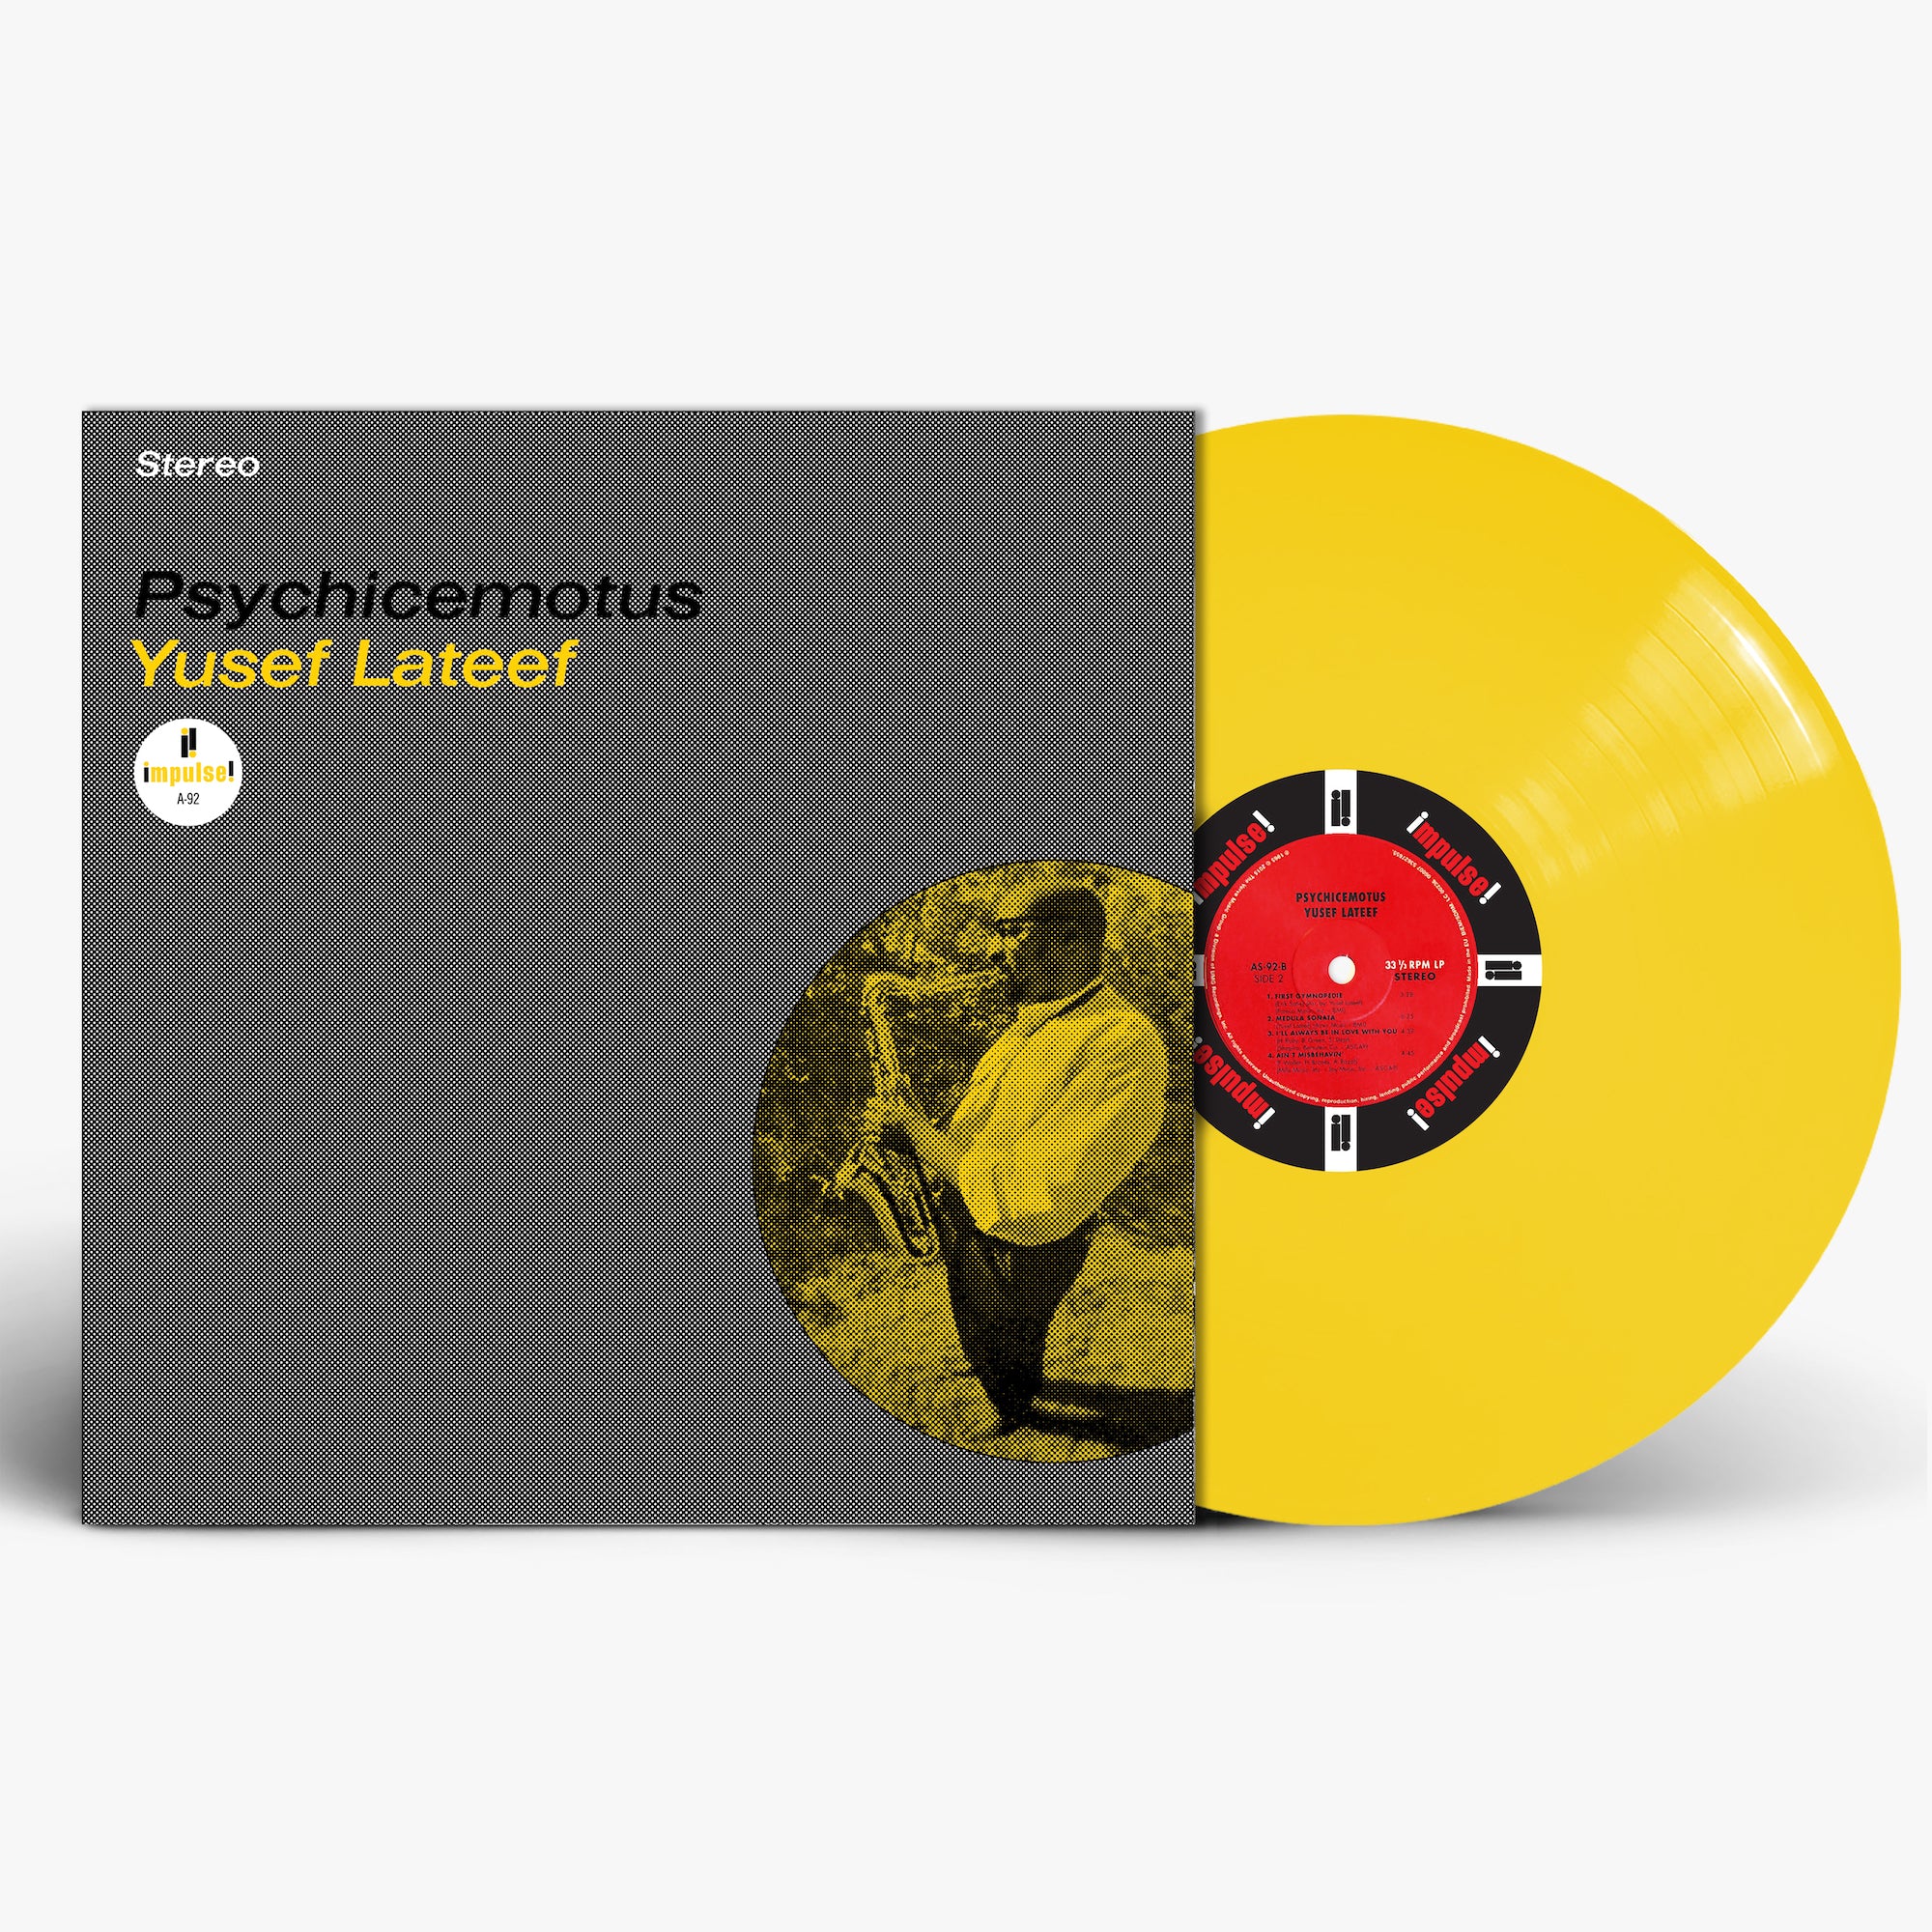 Psychicemotus (Limited Edition Yellow Vinyl)